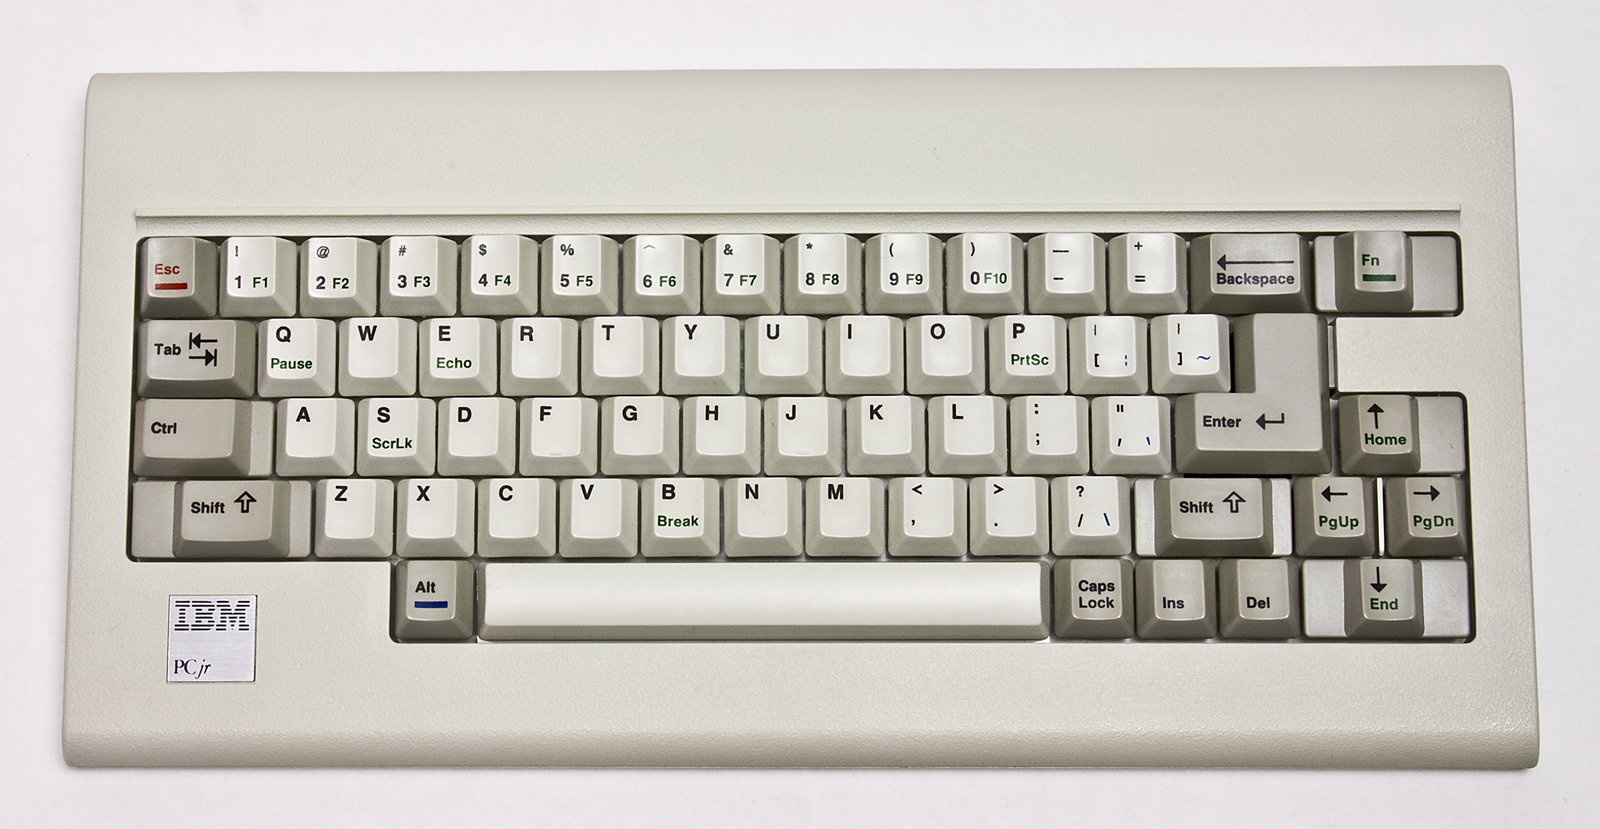 IBM PCJr keyboard - as originally designed.